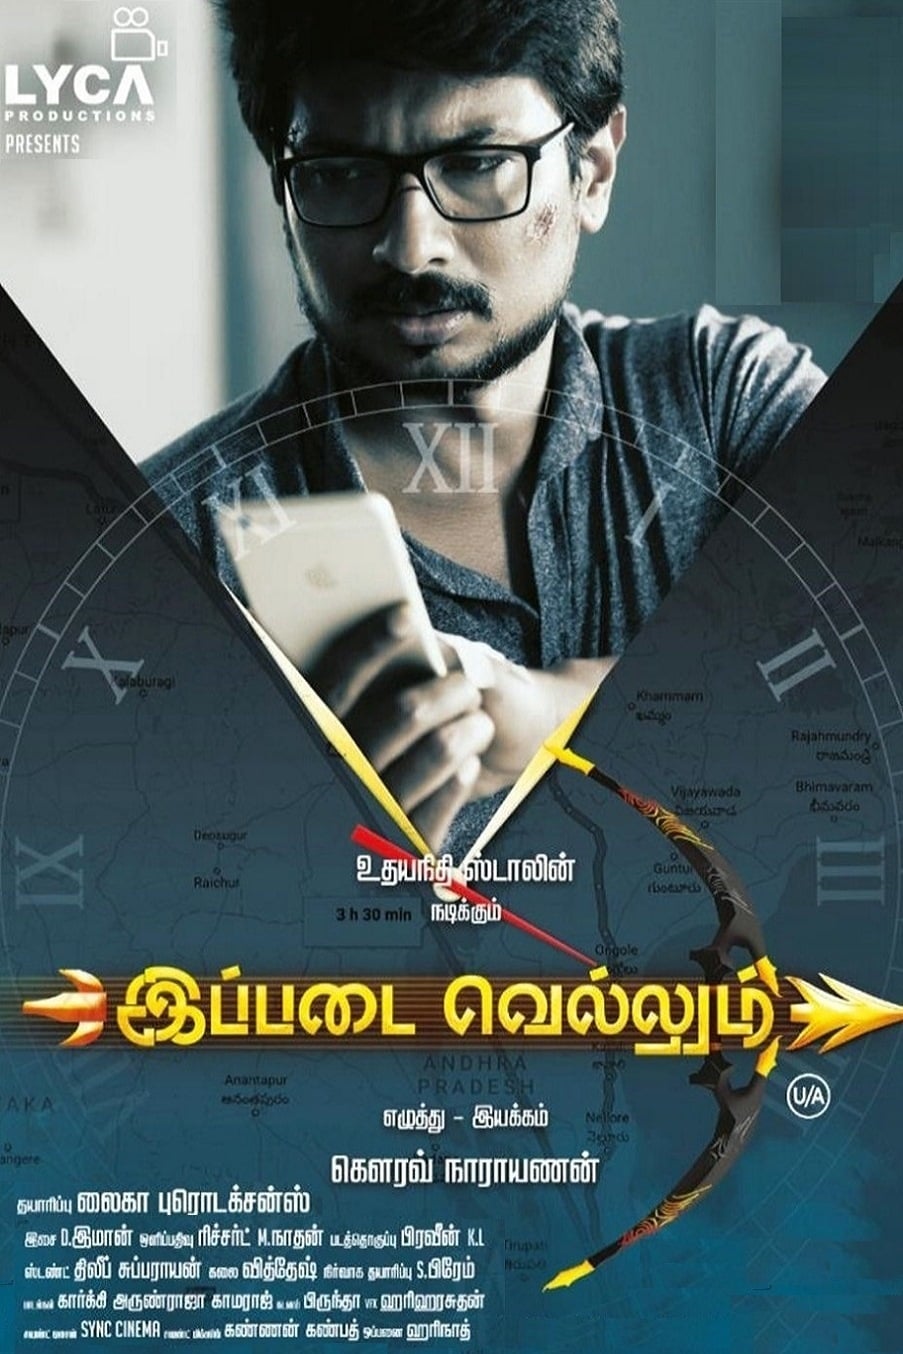 Poster for the movie "Ippadai Vellum"